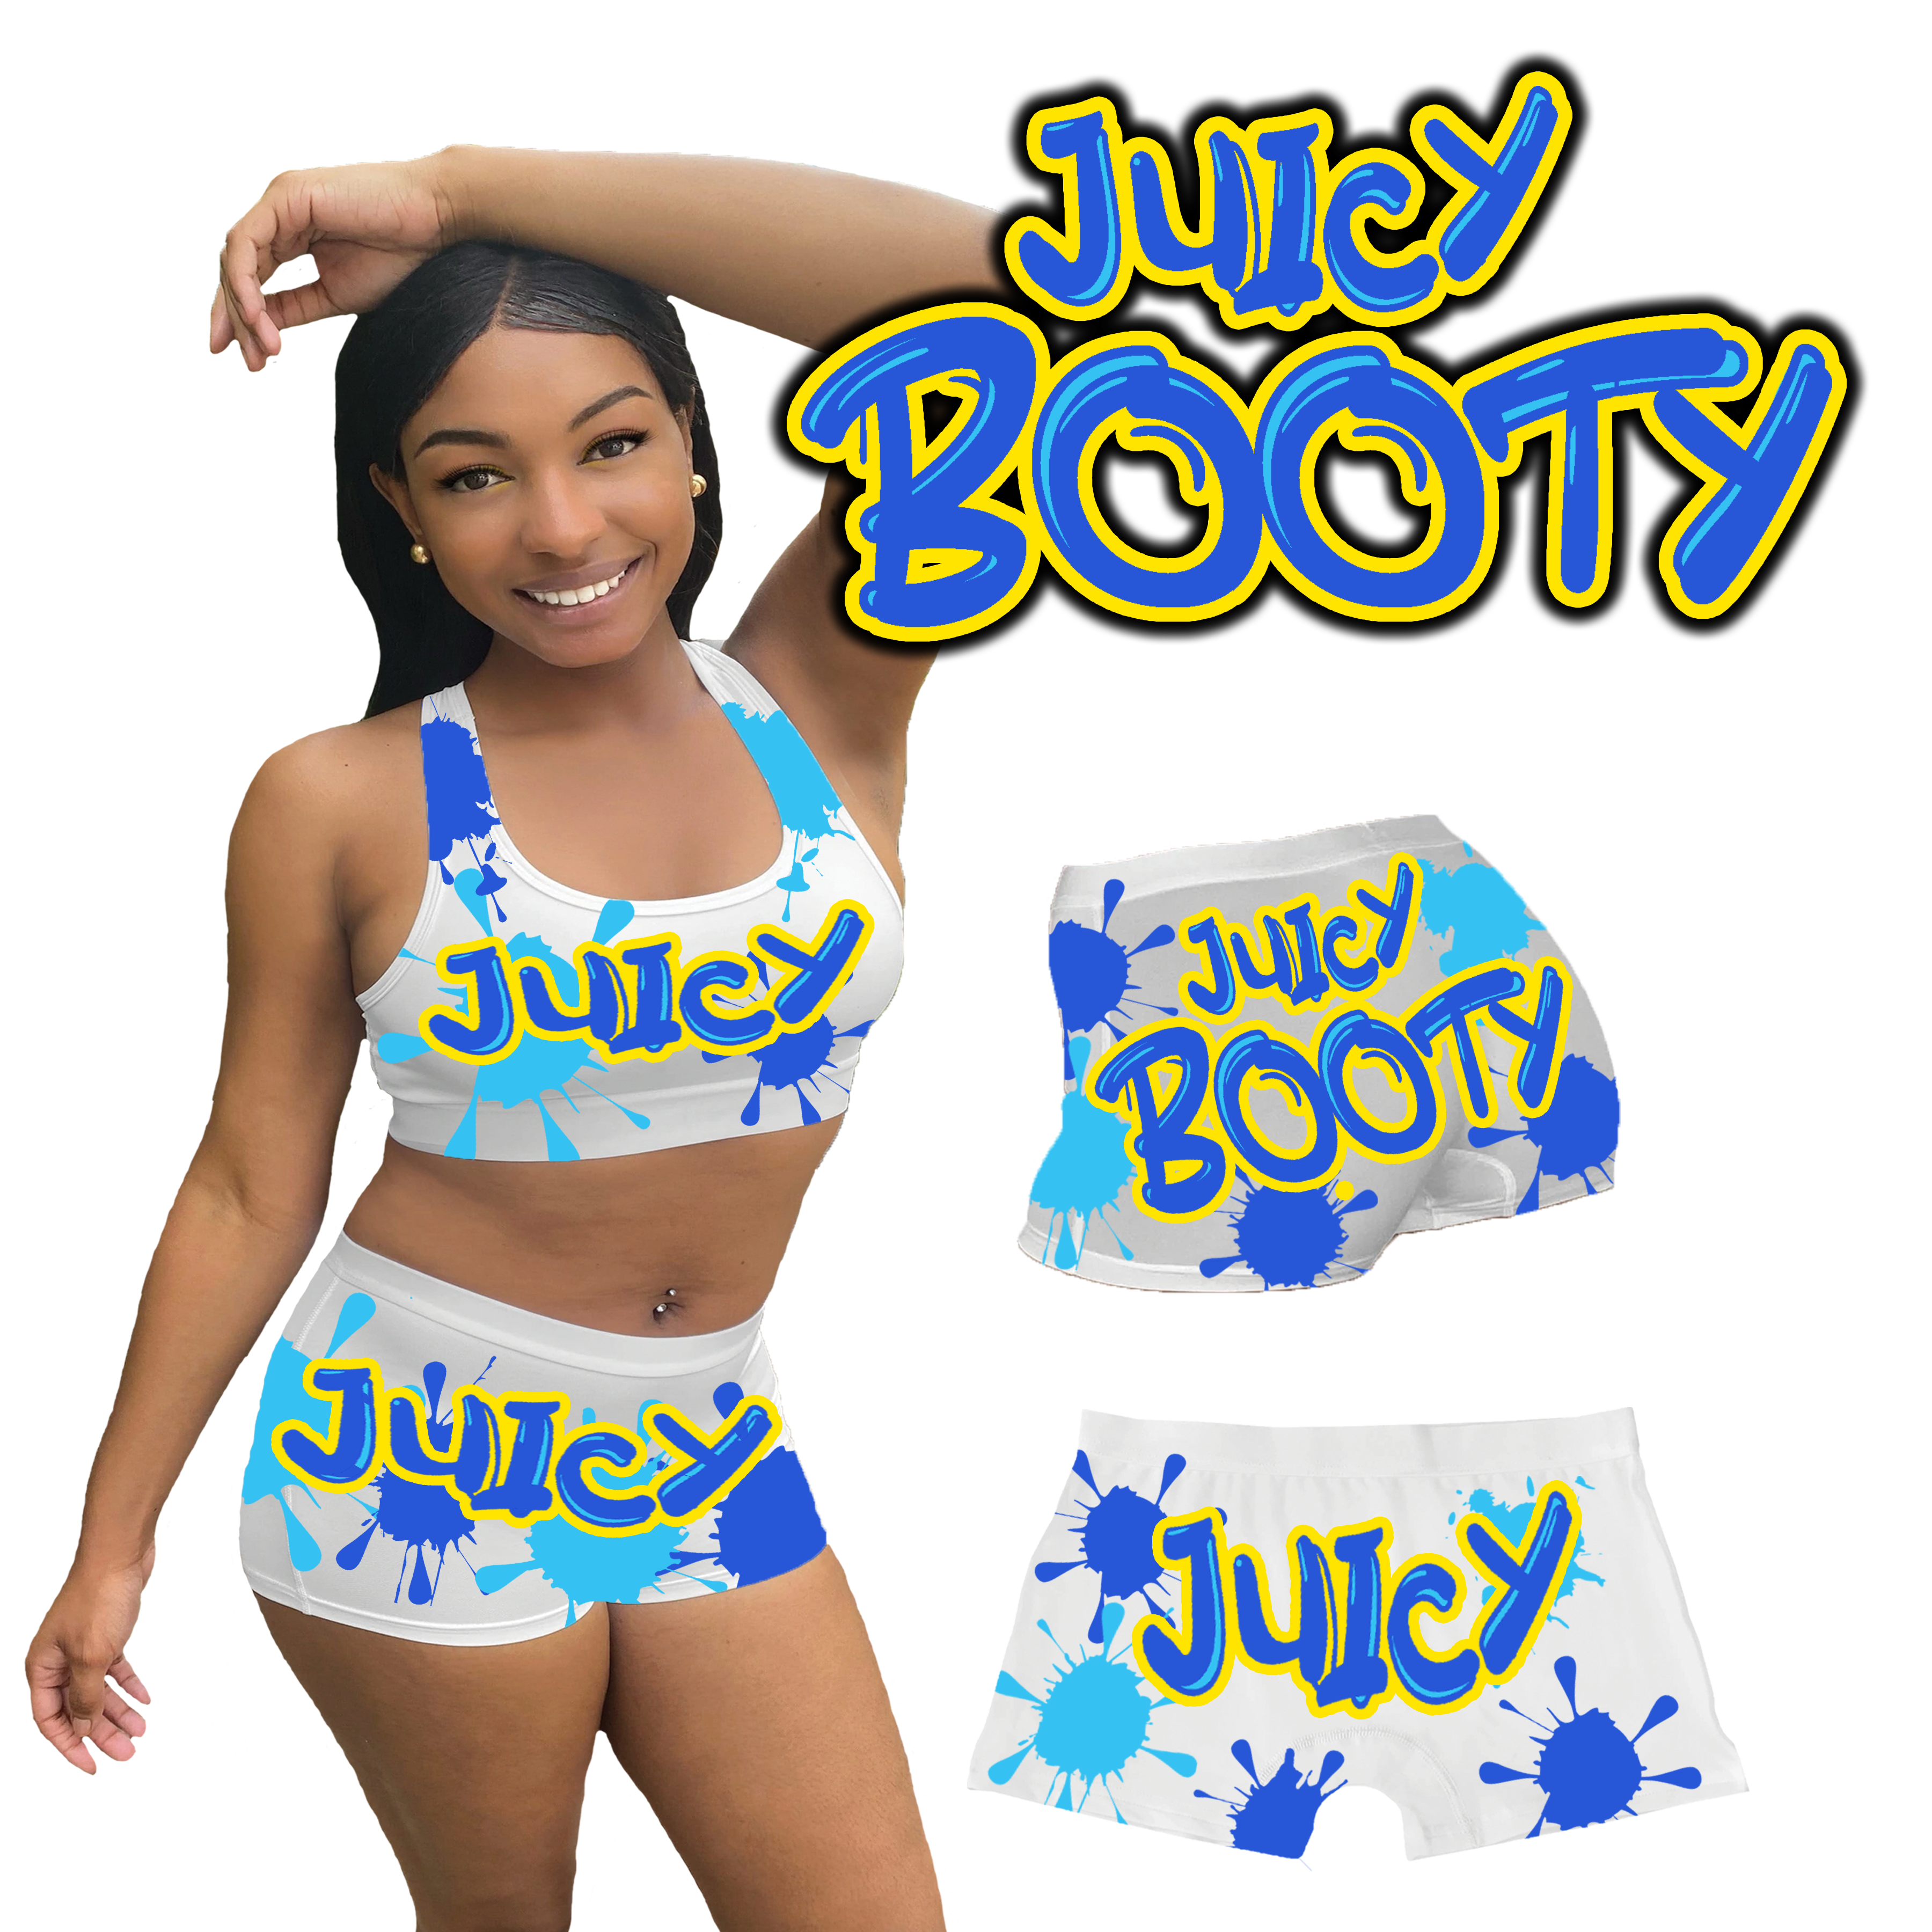 Juicy Booty.Com